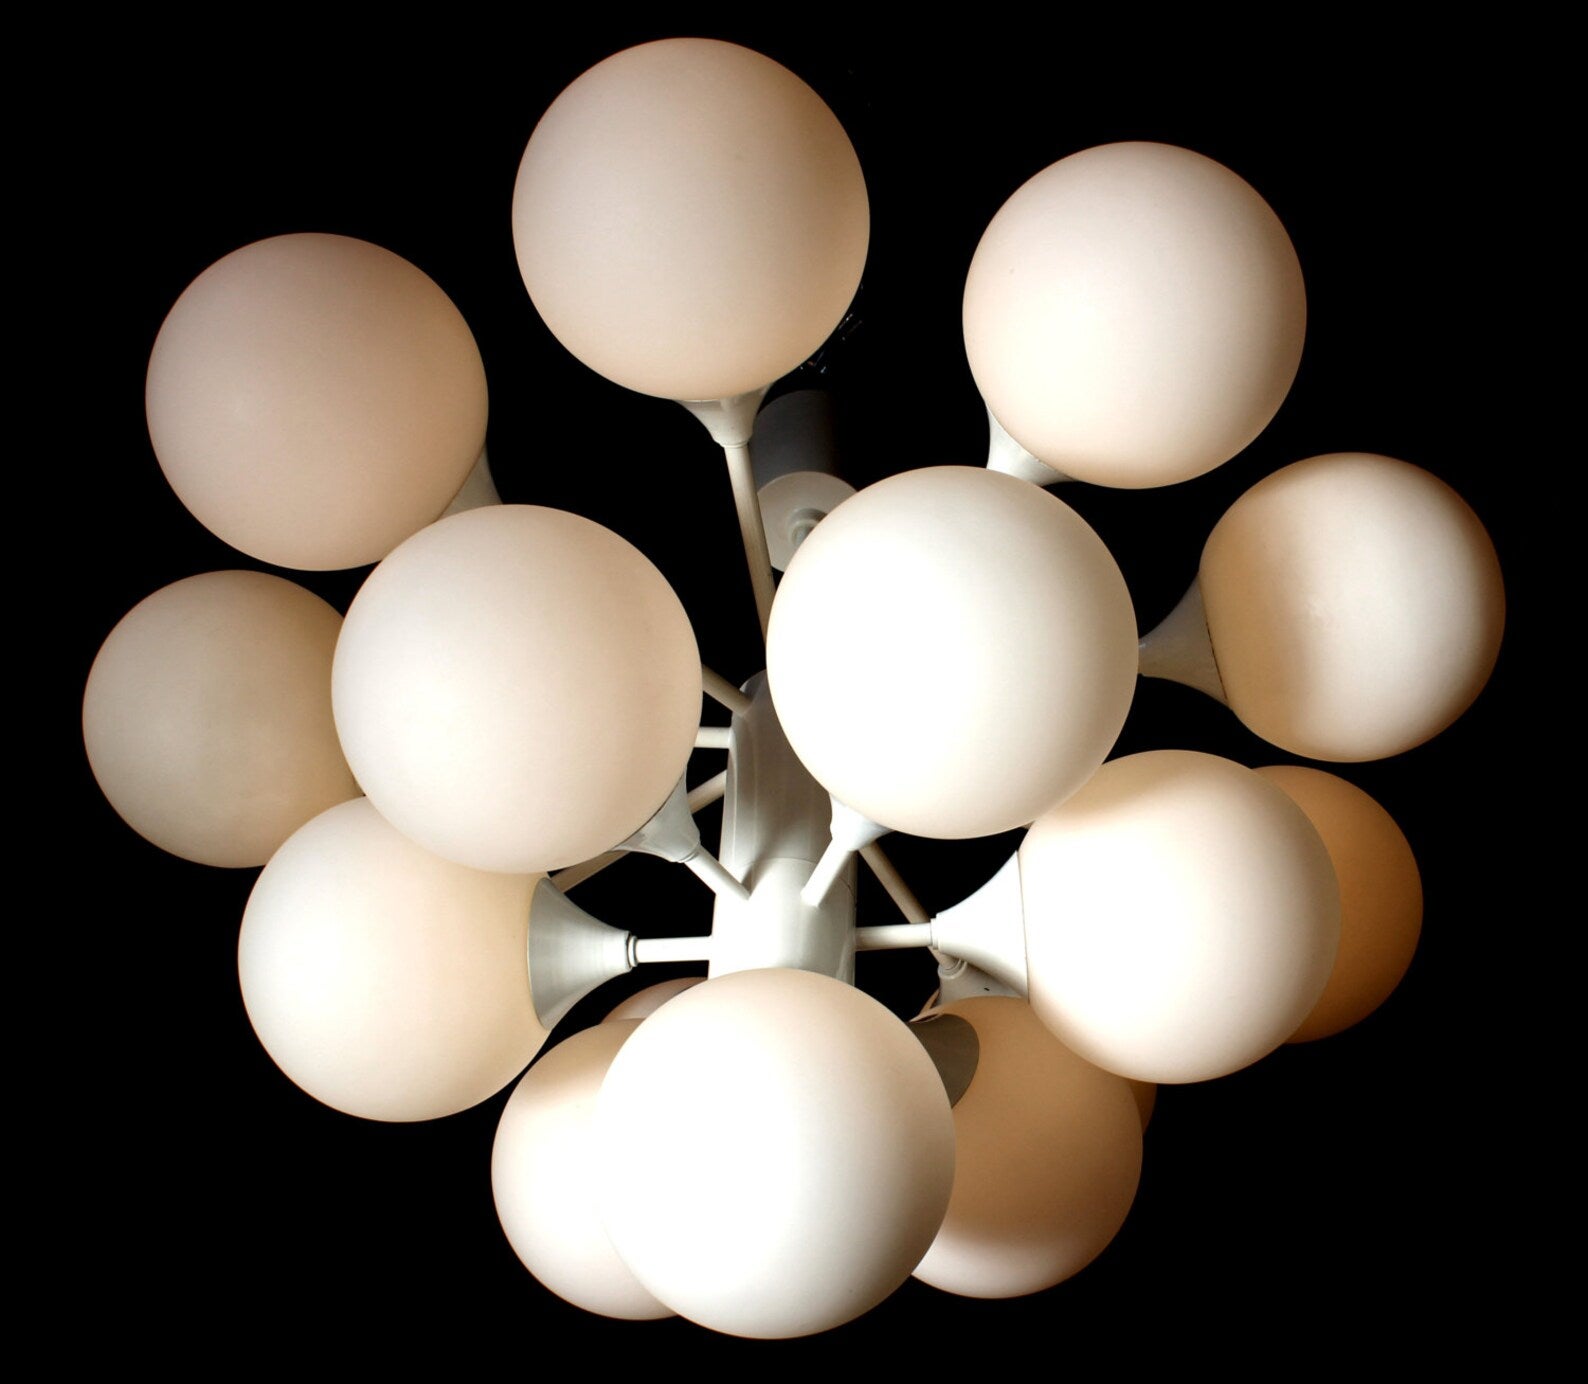 Organic 16 lights (e14) opal glass globes chandelier by Kaiser Germany.

Measures: diameter 25,5